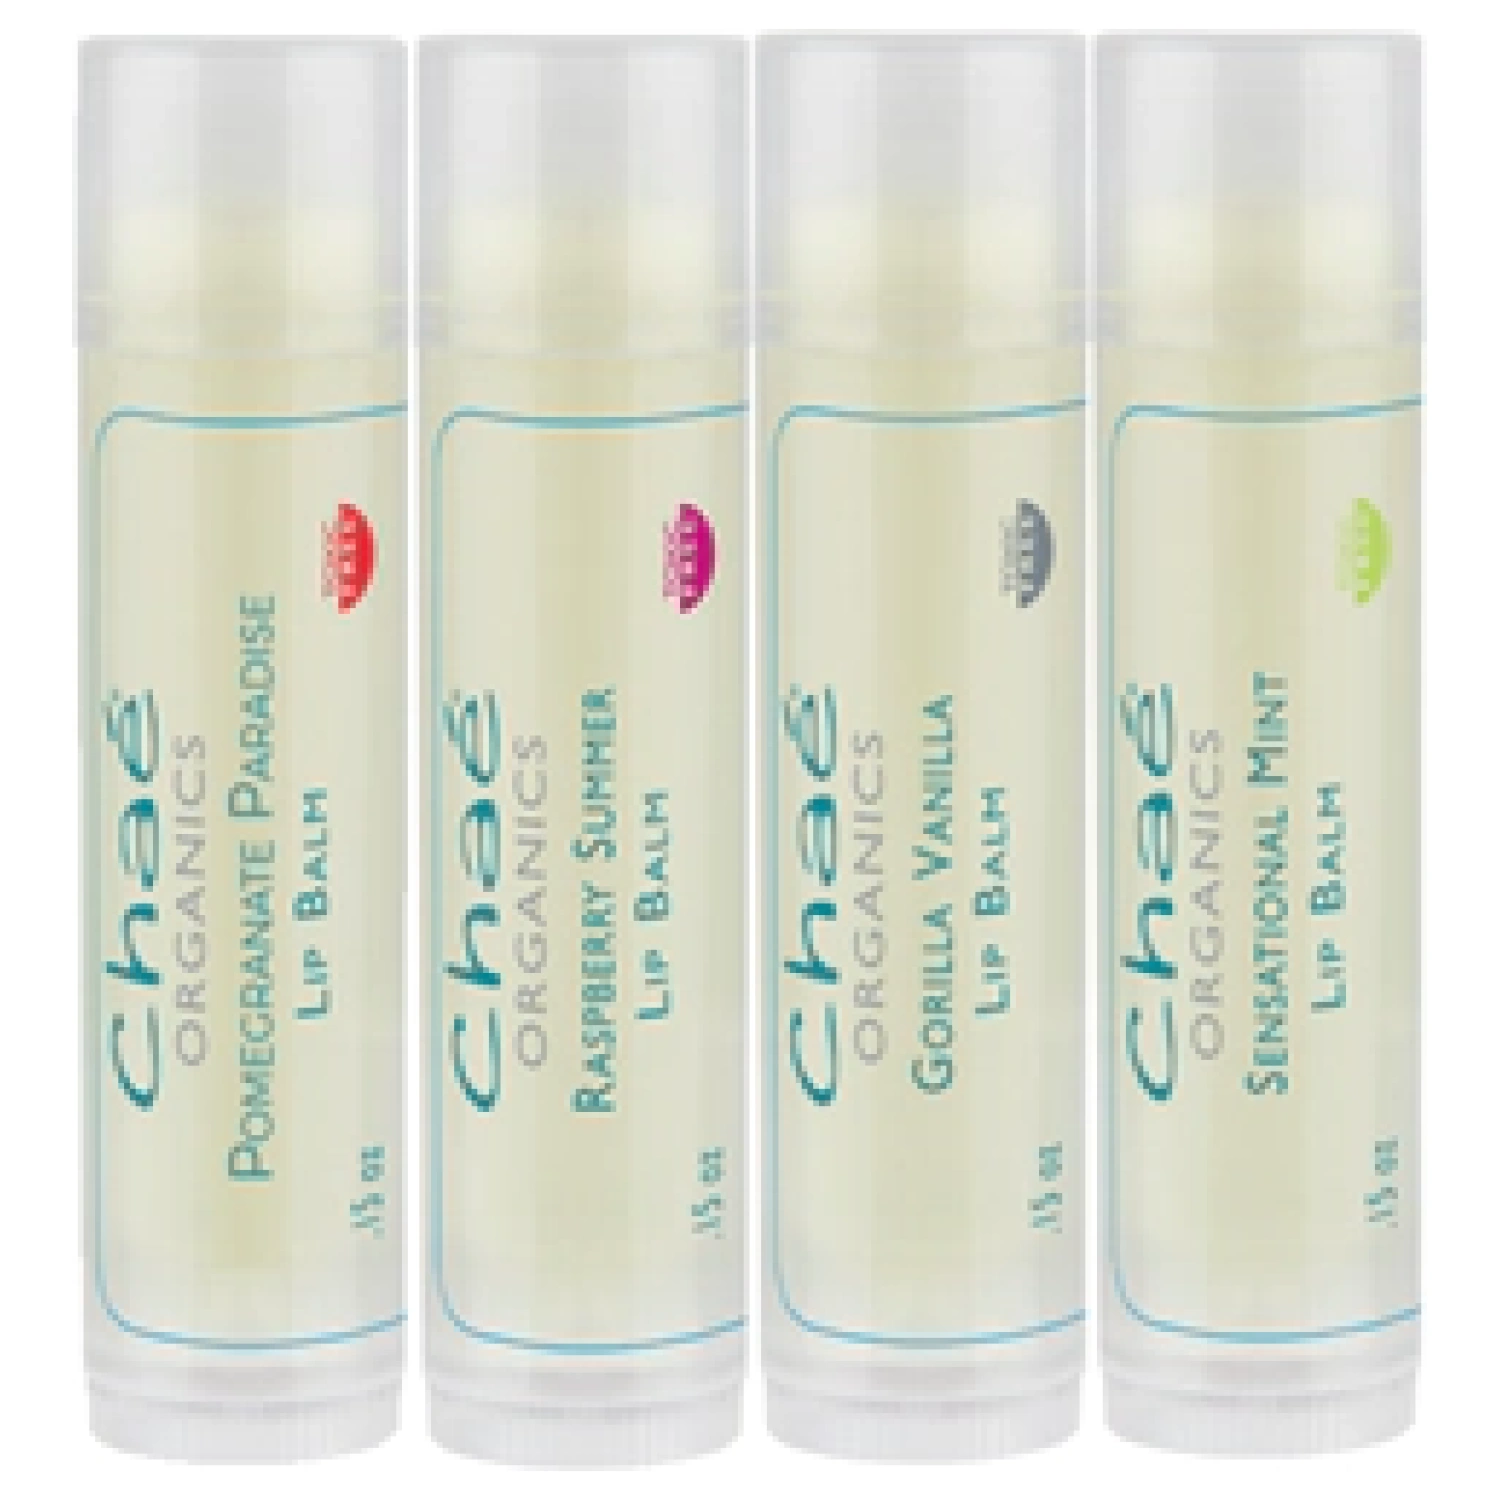 Organic Skin Care Chae Organics Lip Balm